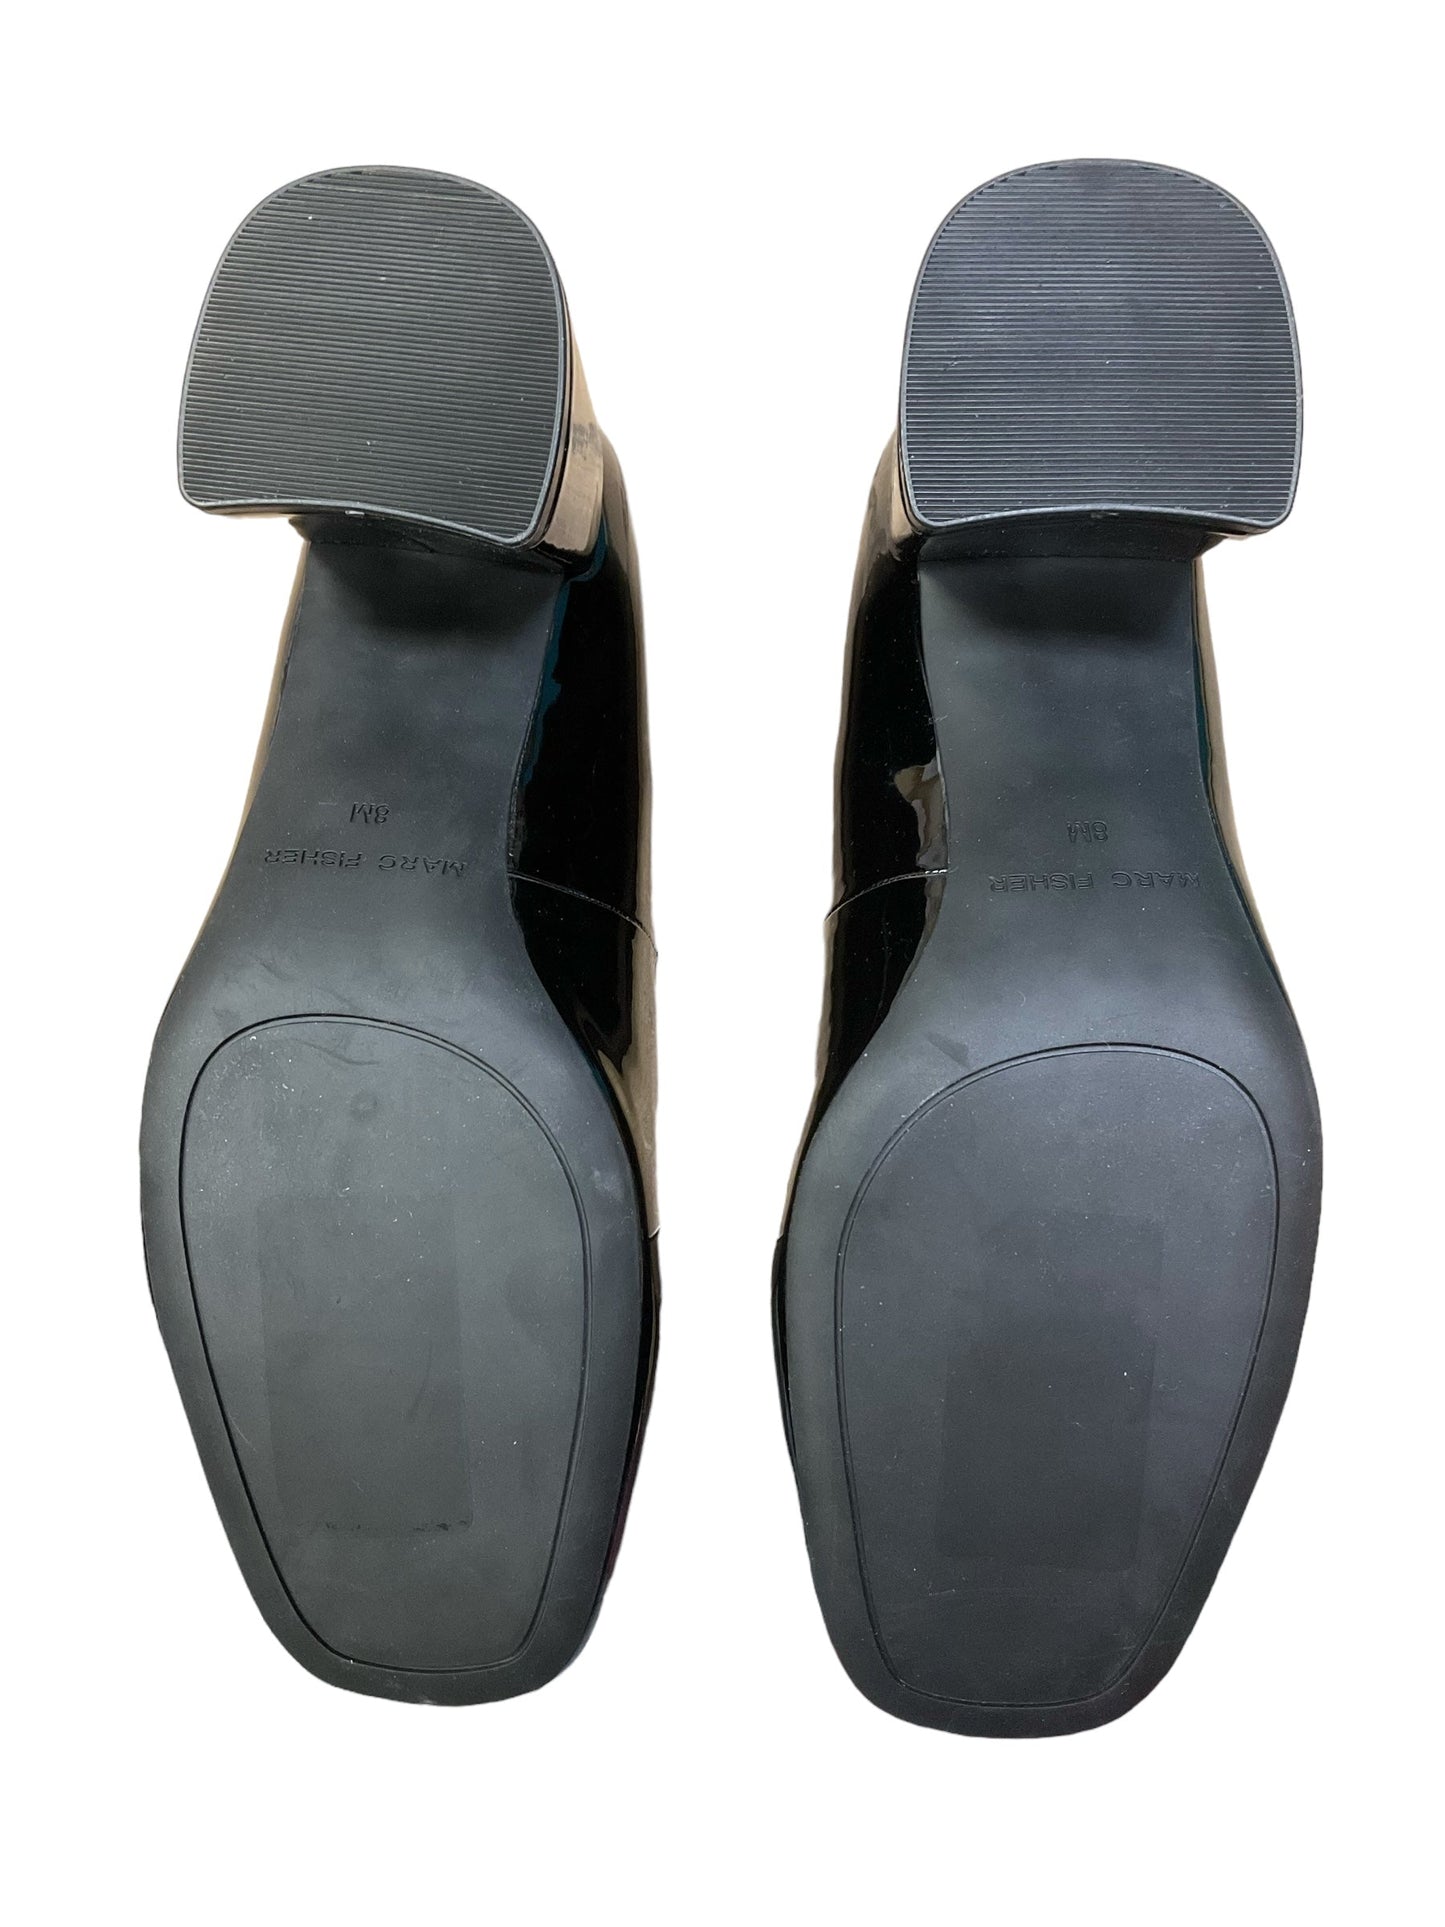 Black Shoes Heels Block Marc Fisher, Size 8